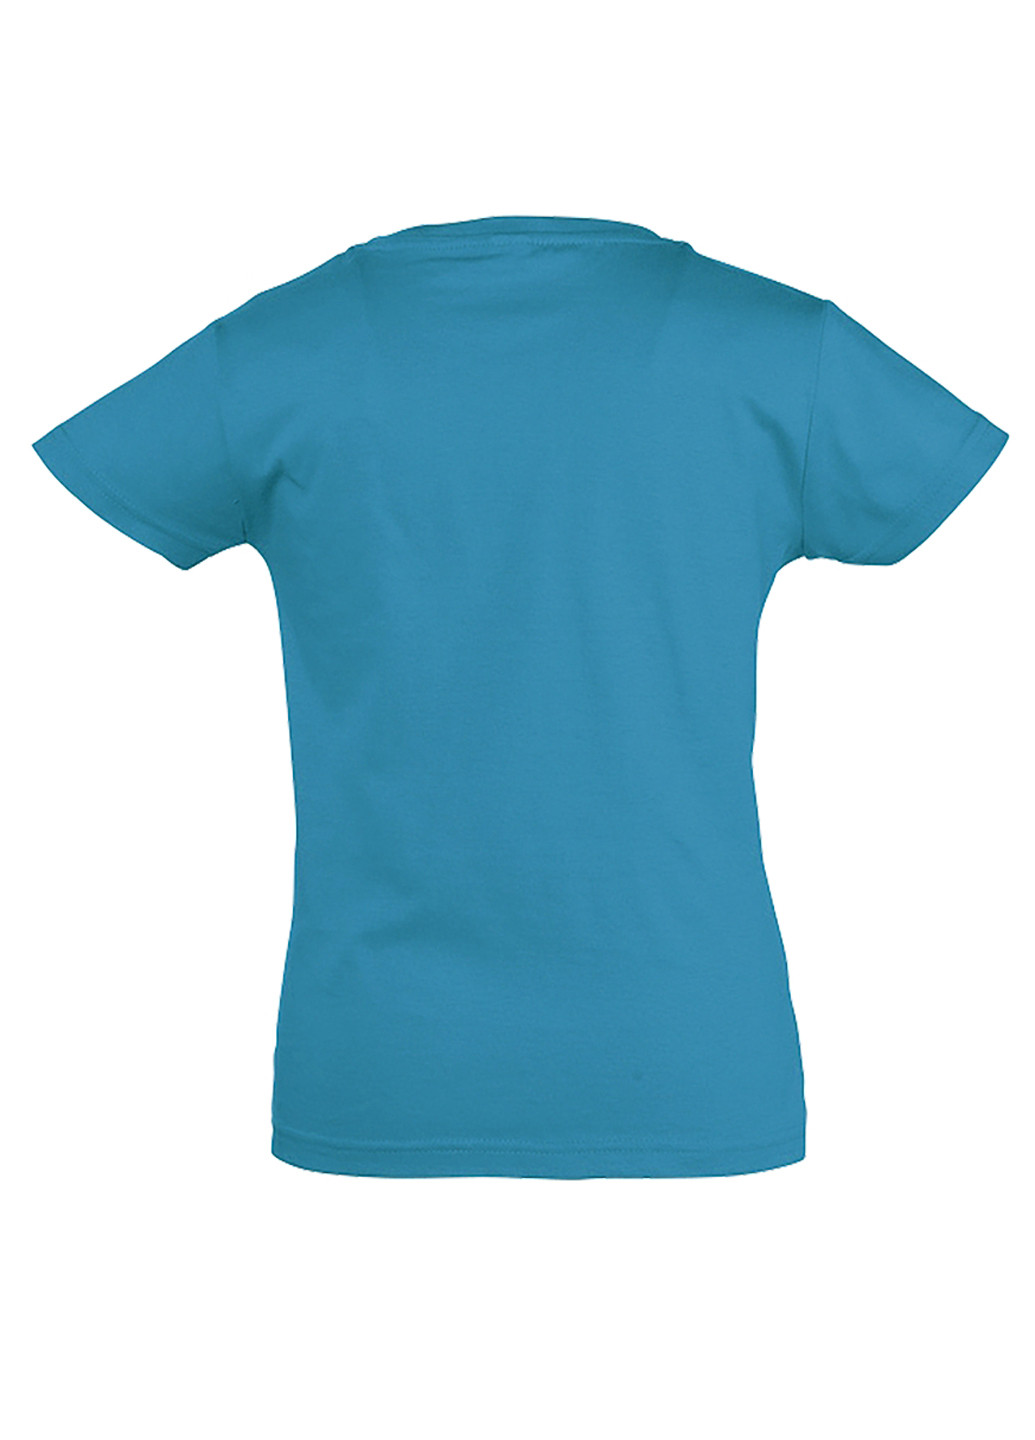 Синяя летняя футболка с коротким рукавом Sol's